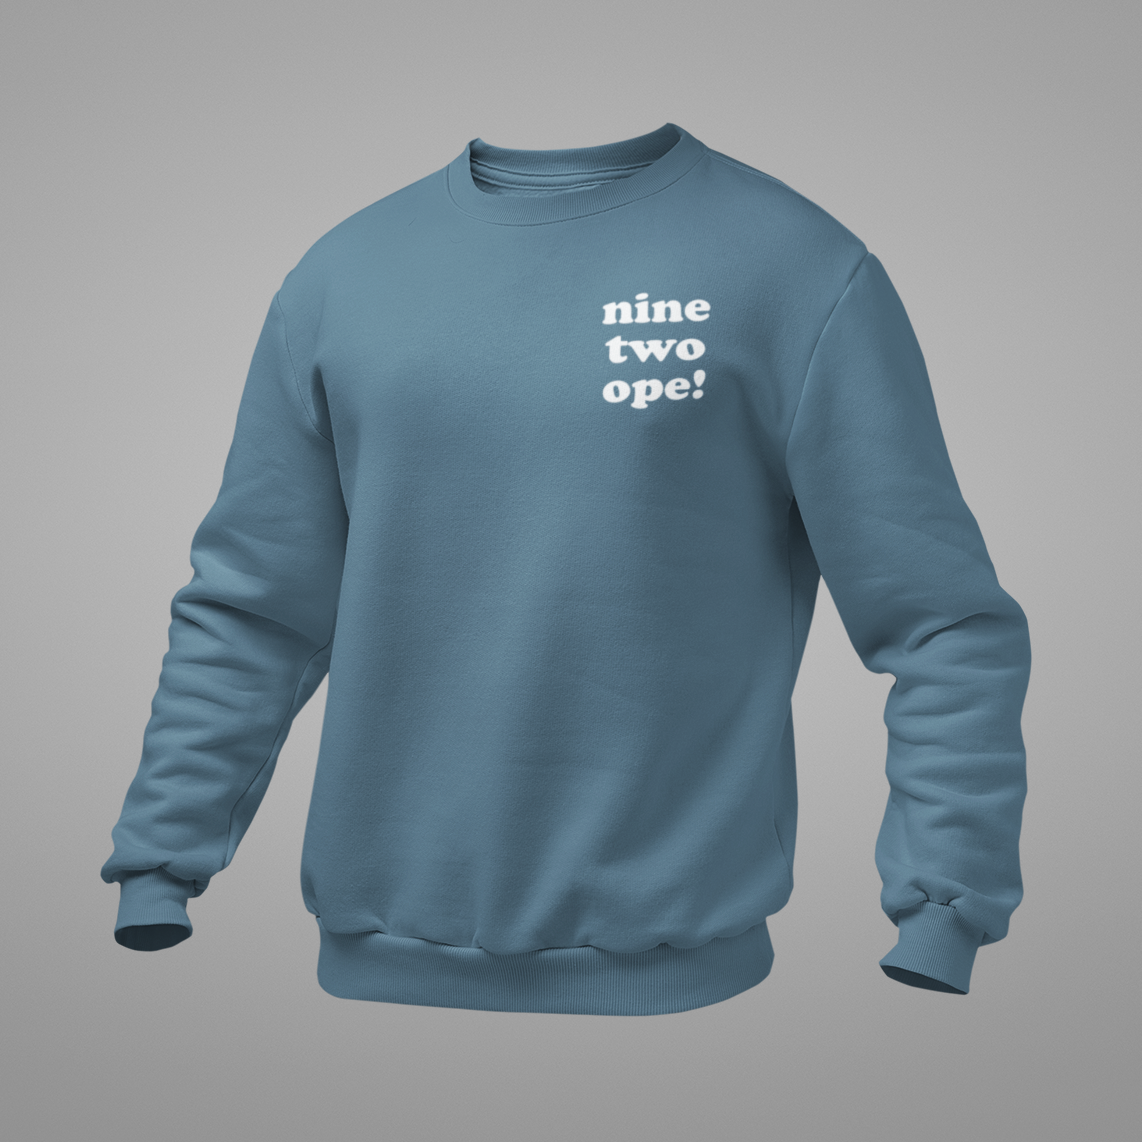 Indigo Blue "nine two ope!" Area Code Crewneck Sweatshirt - 3D Puff Lettering